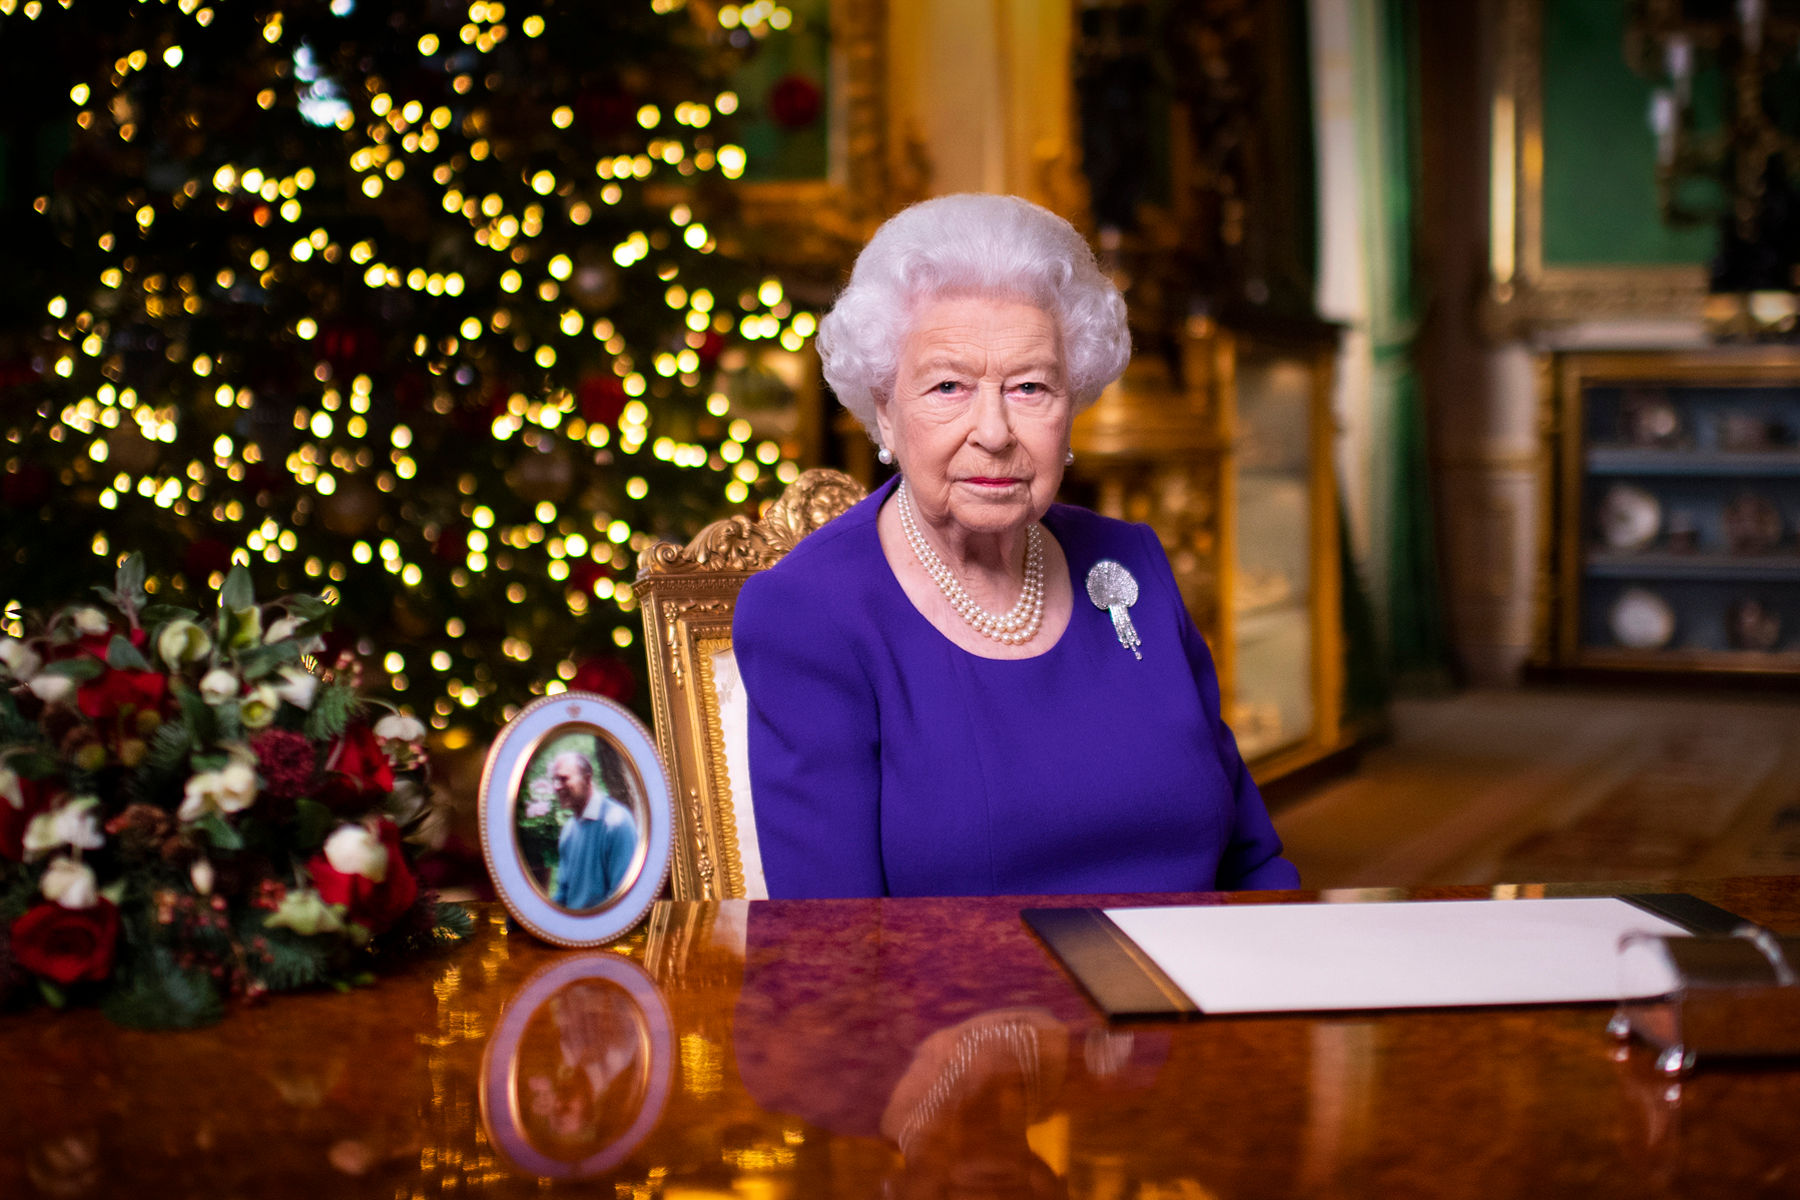 Queen Elizabeth II, Prince Philip receive COVID-19 vaccinations: Buckingham Palace